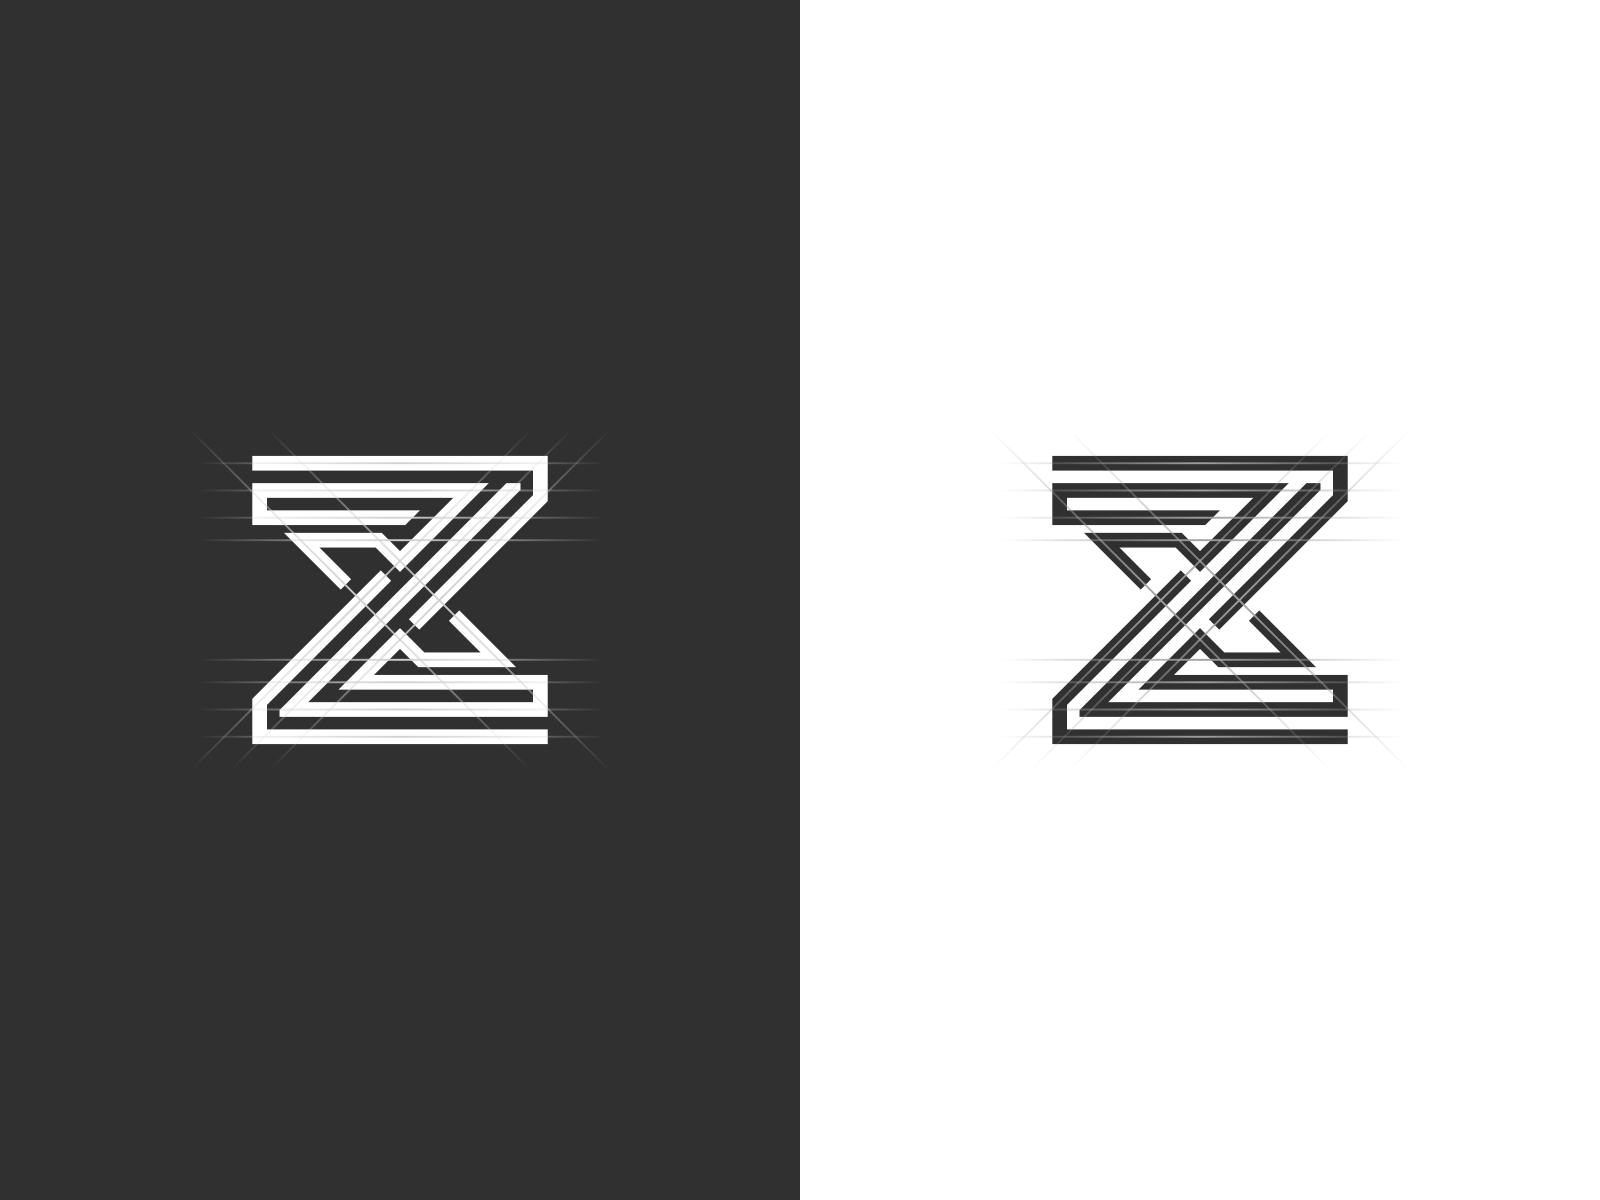 ZX logo by initiallogo on Dribbble